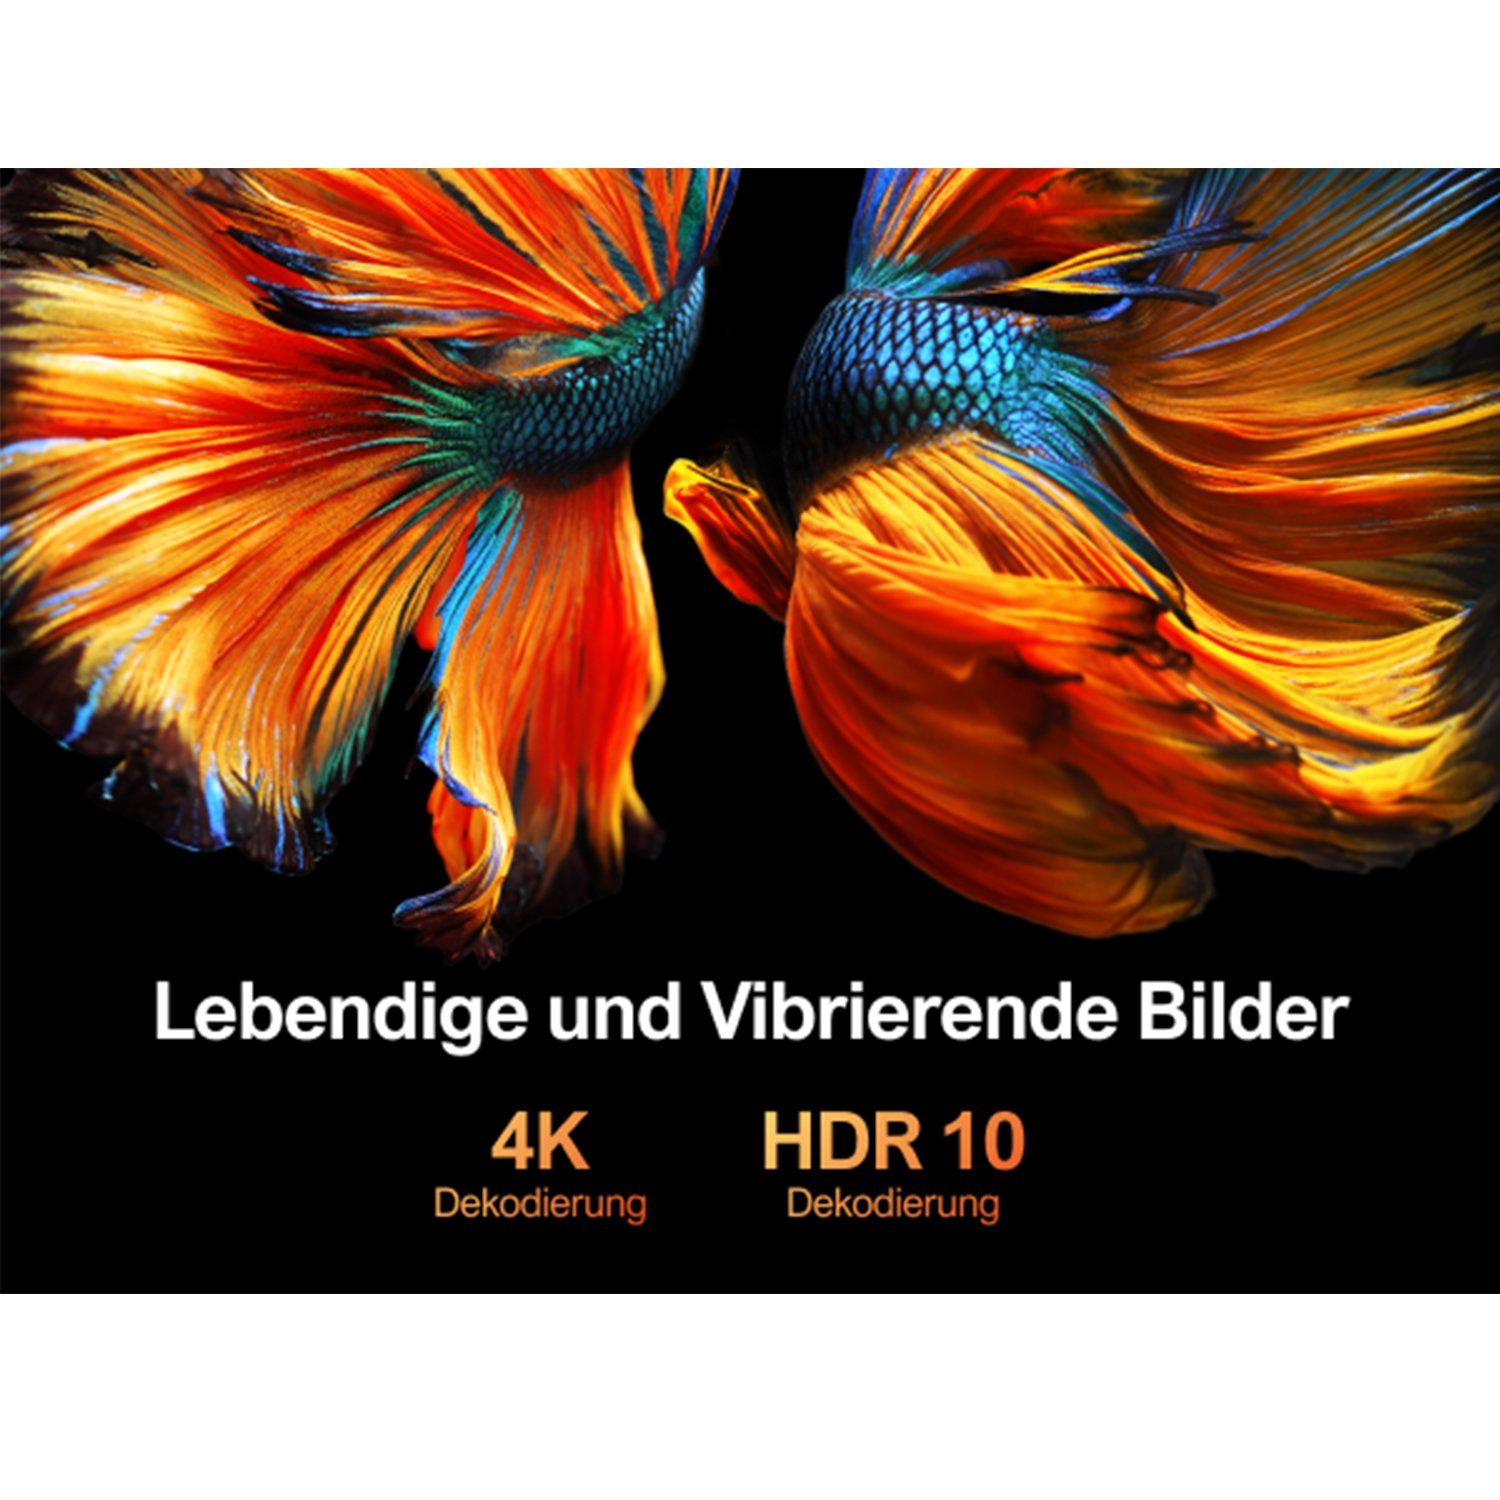 Ultimea Native 1080P Full lm, 15000:1, Beamer Full px, (21000 Autofokus&6D-Autotrapezkorrektur) x 1920 1080 HD,4K-Decodierung&HDR10, schwarz HD